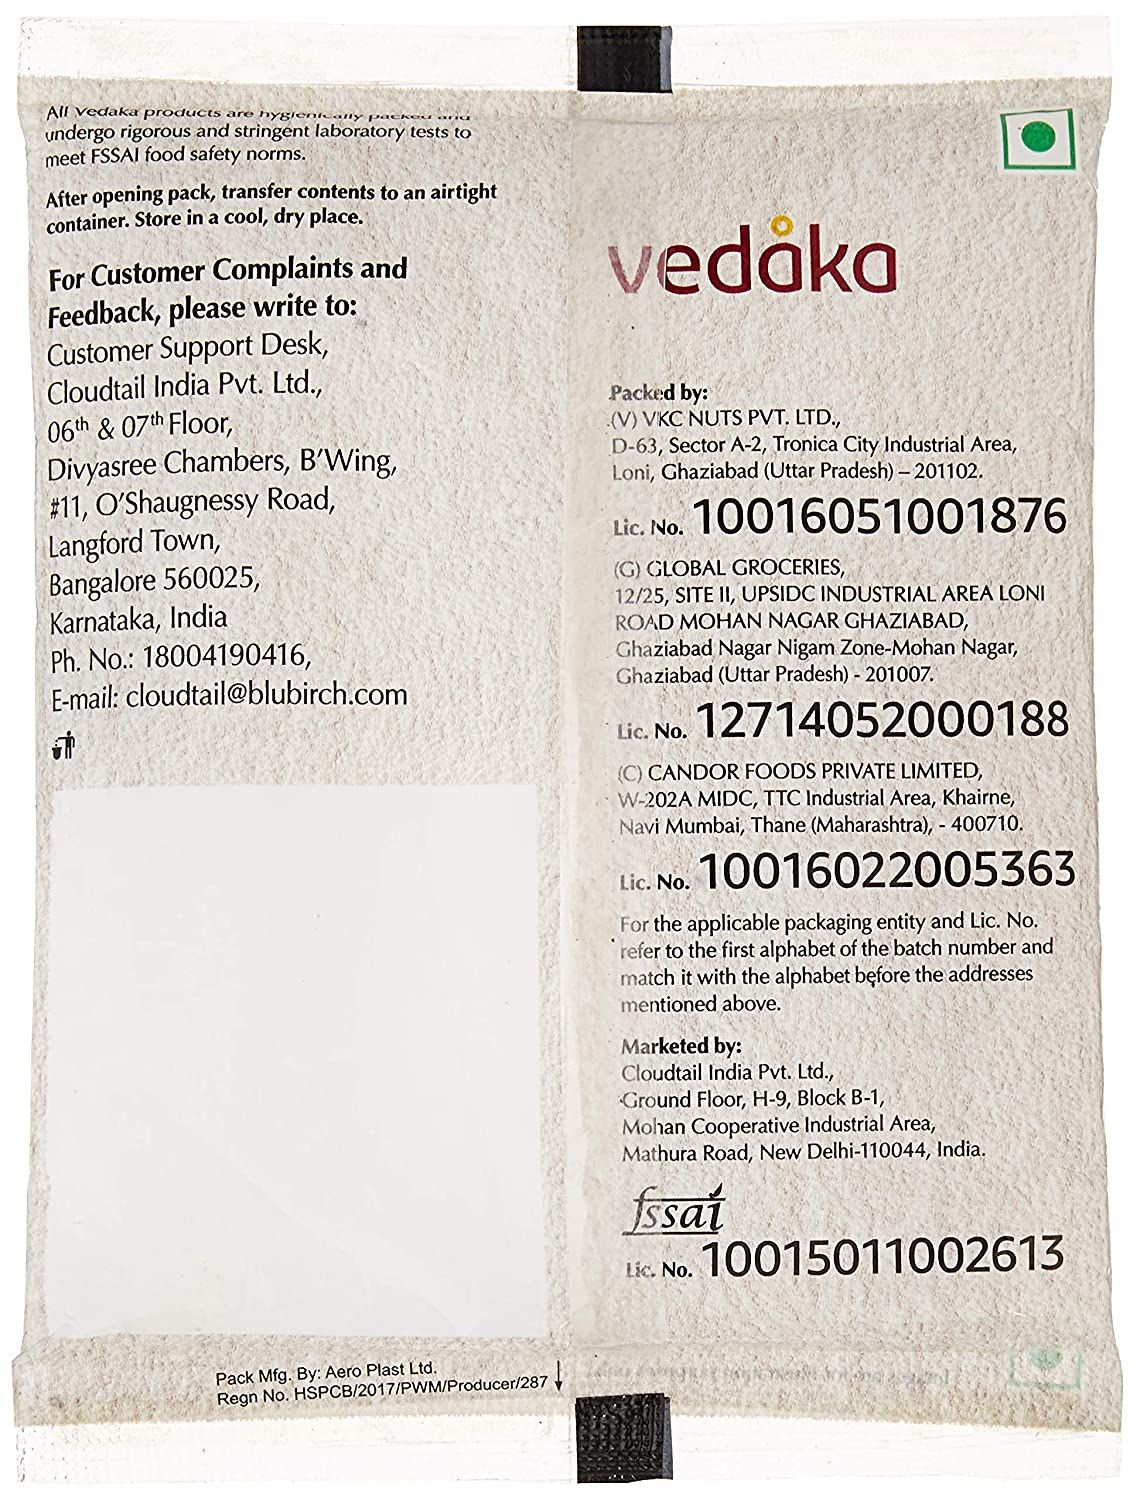 Vedaka Premium Prunes Image